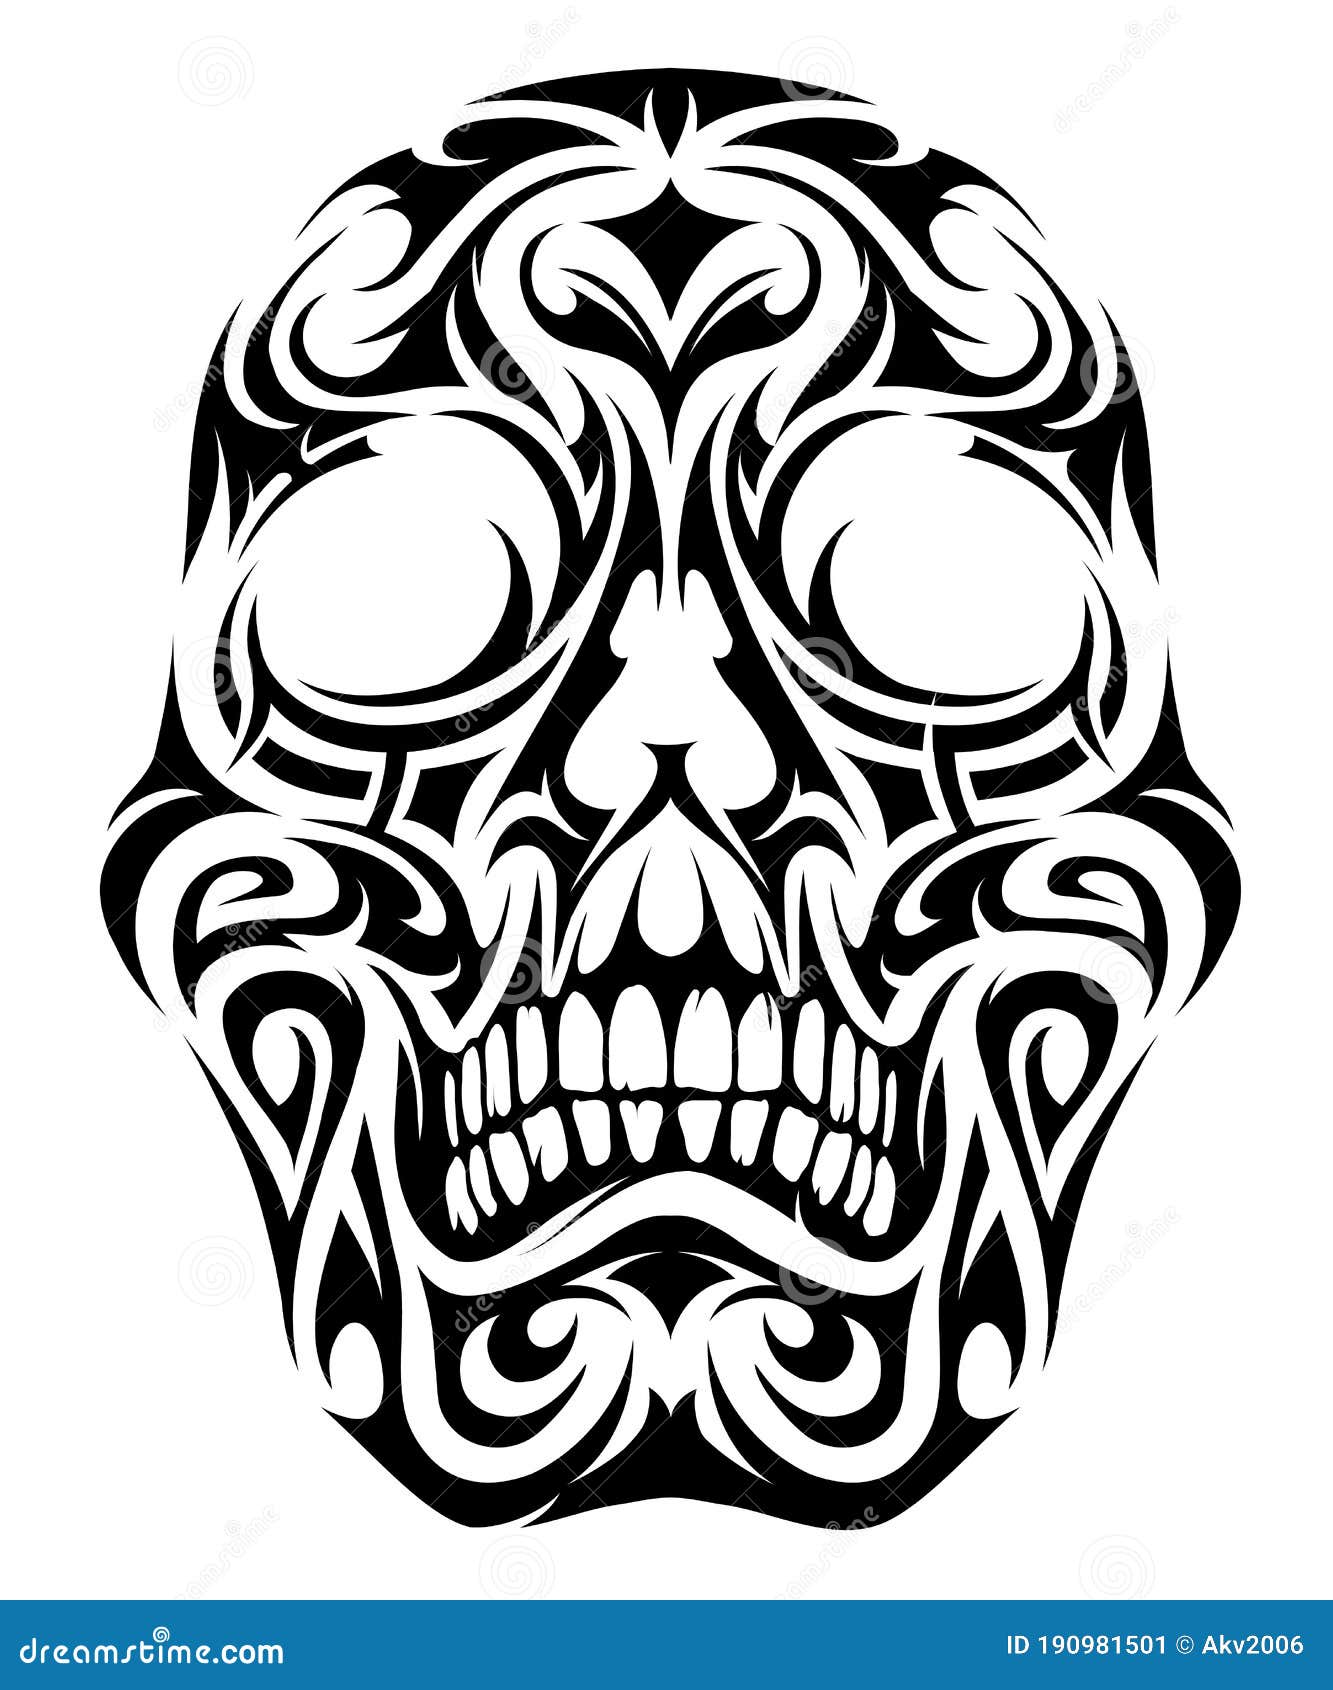 Art devil skull tattoo. Art design skull head mix graphic tribal tattoo  hand pencil drawing on paper. Stock Illustration | Adobe Stock